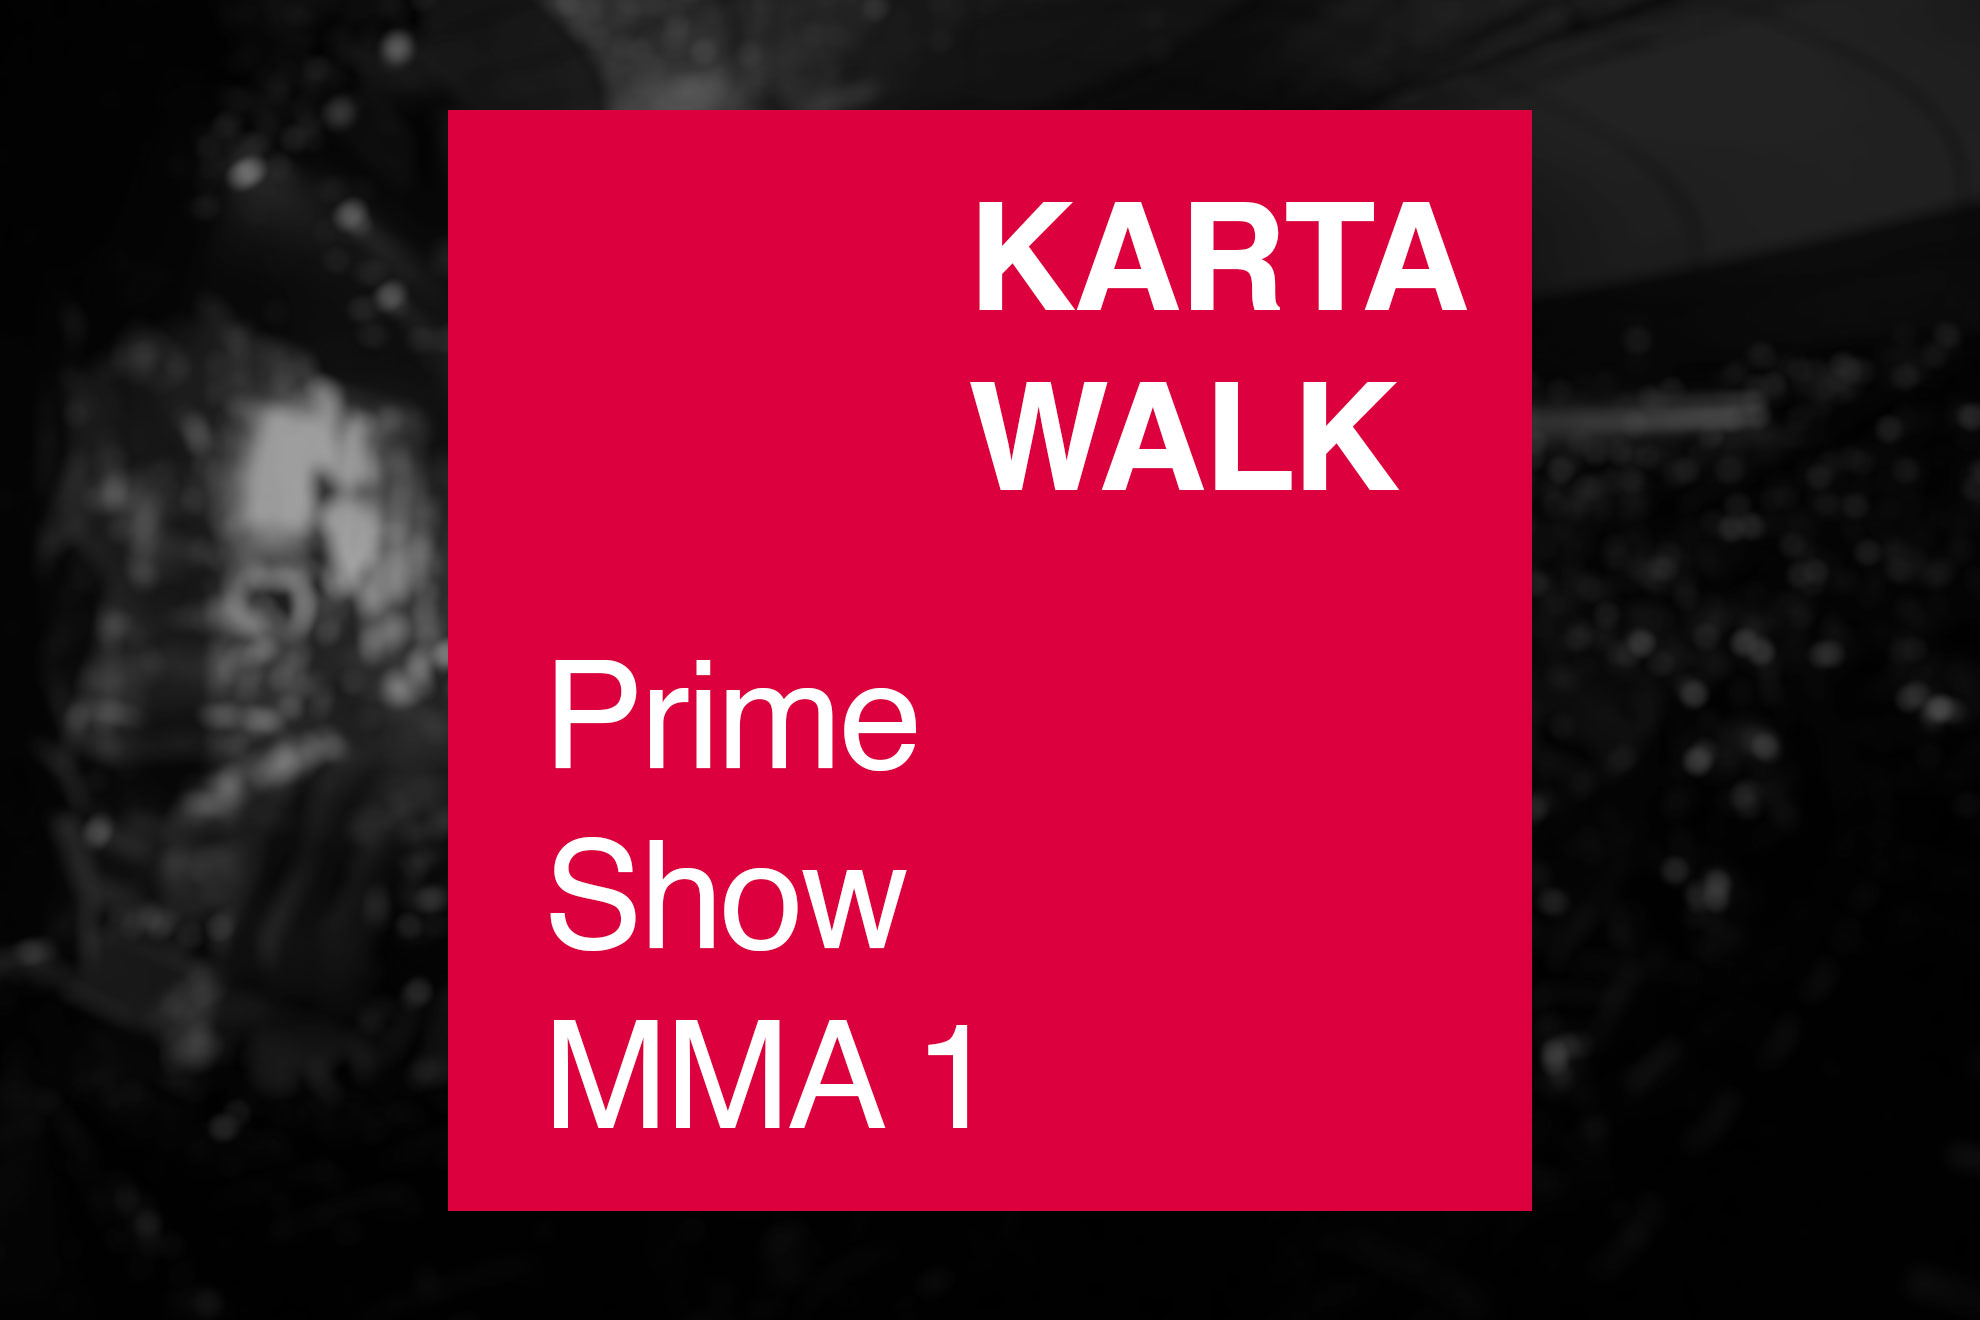 Karta walk Prime Show MMA 1